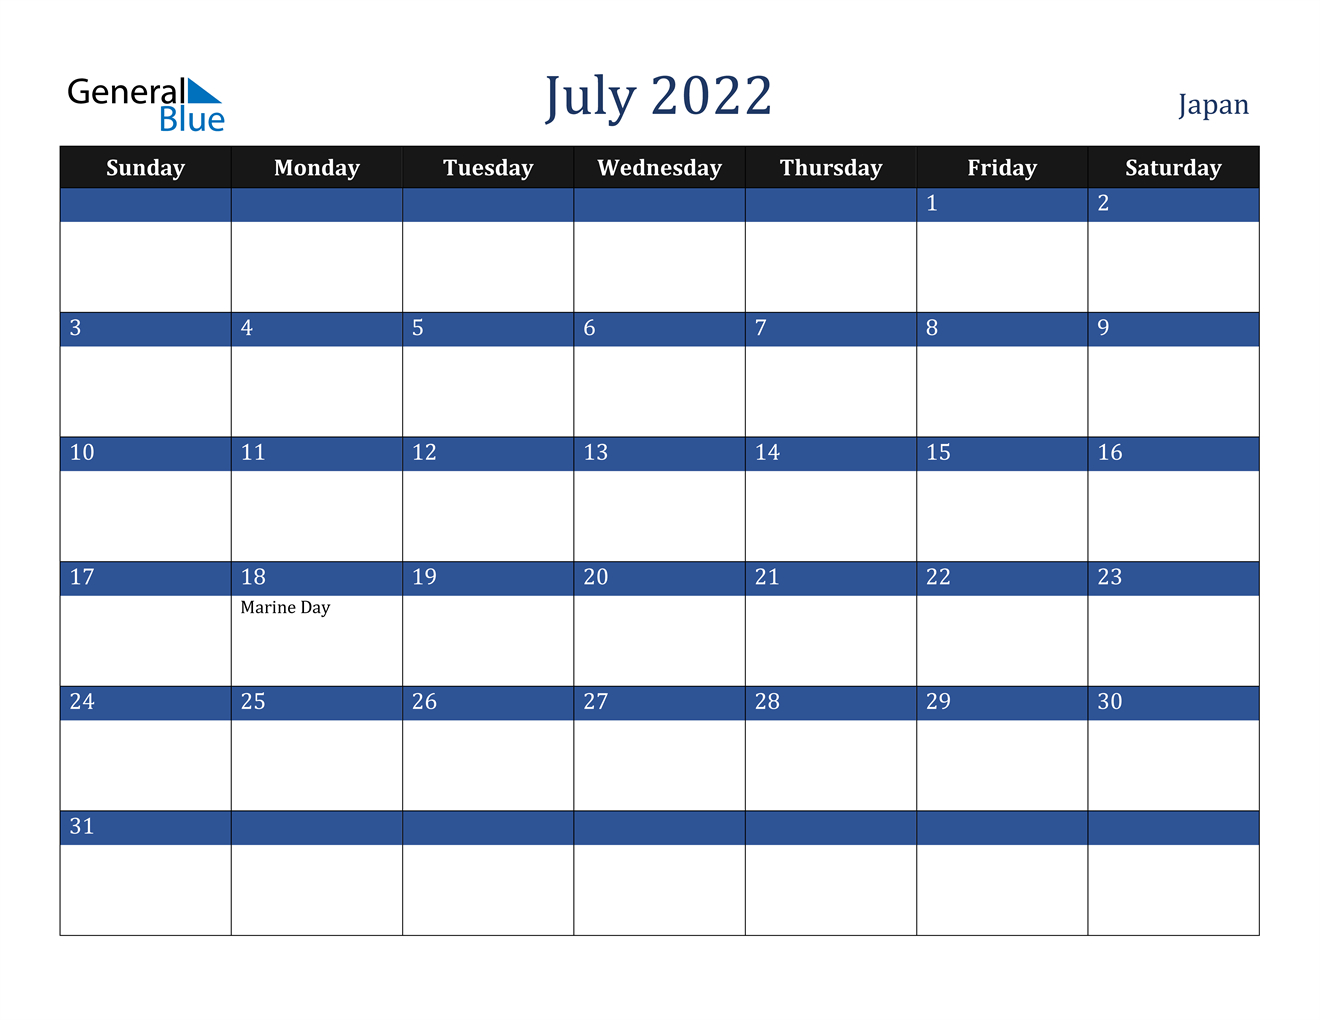 July 2022 Calendar - Japan